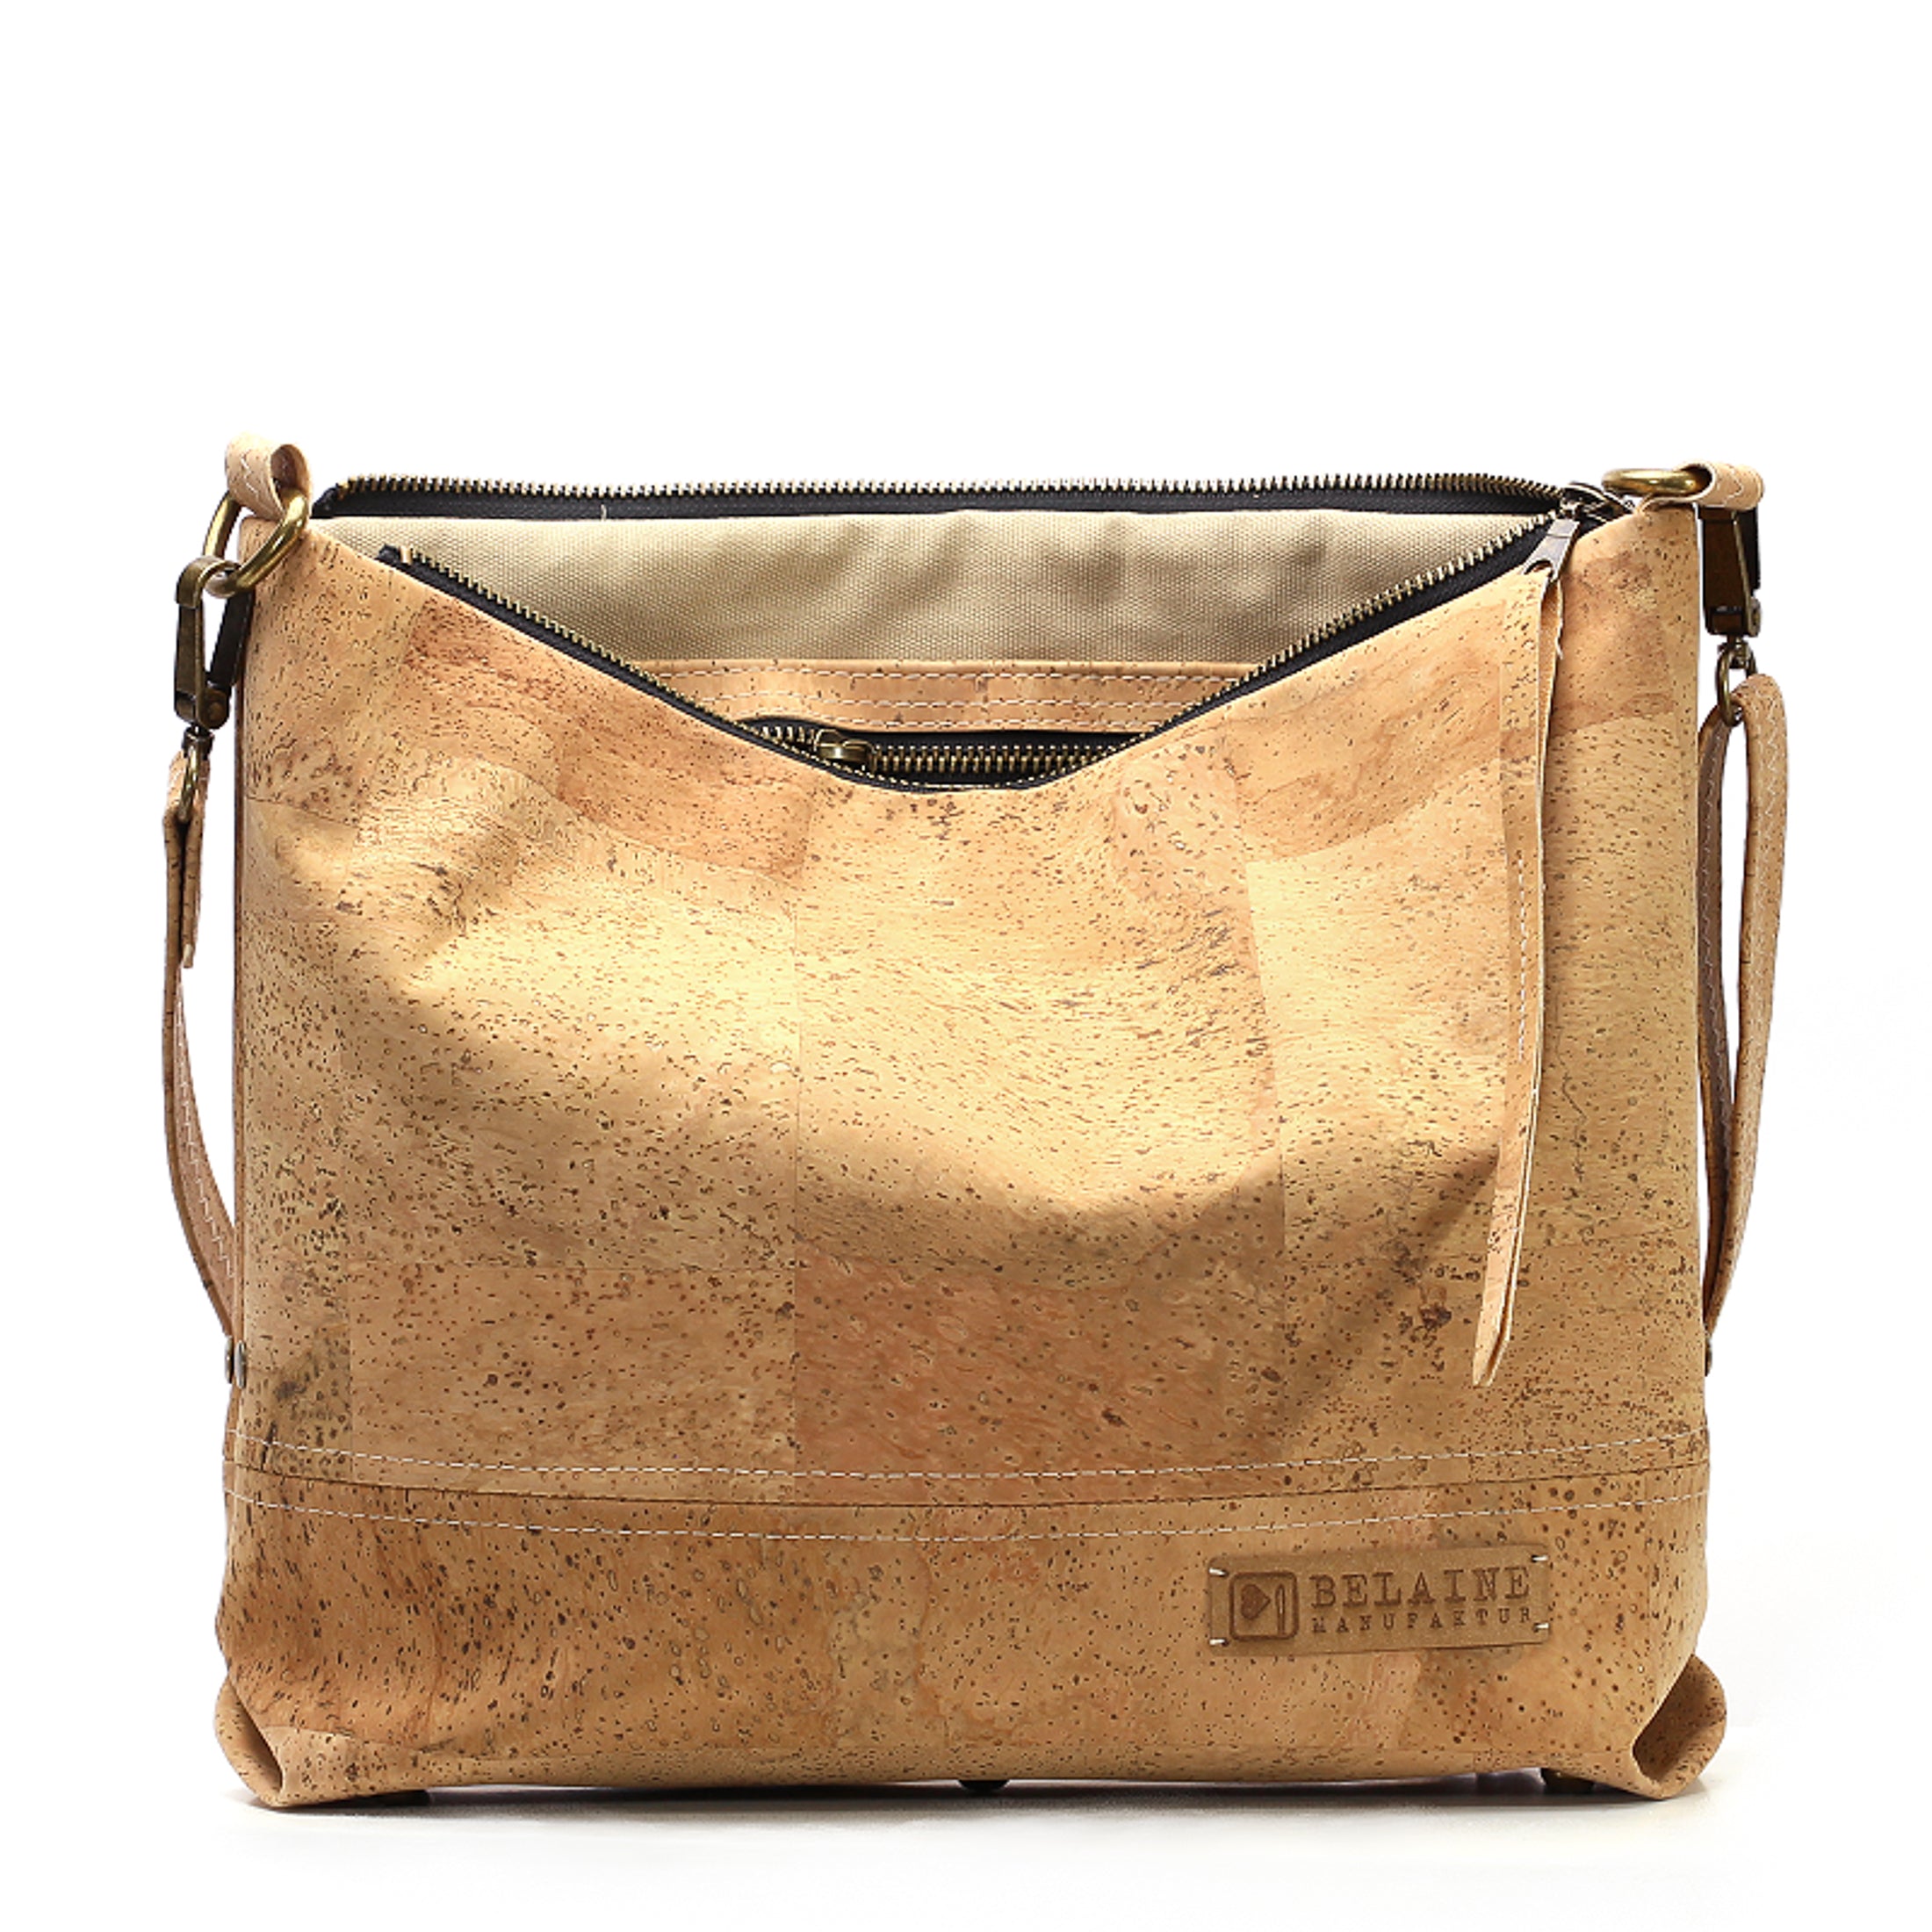 Belaine - Tote Bag - Cork Natural